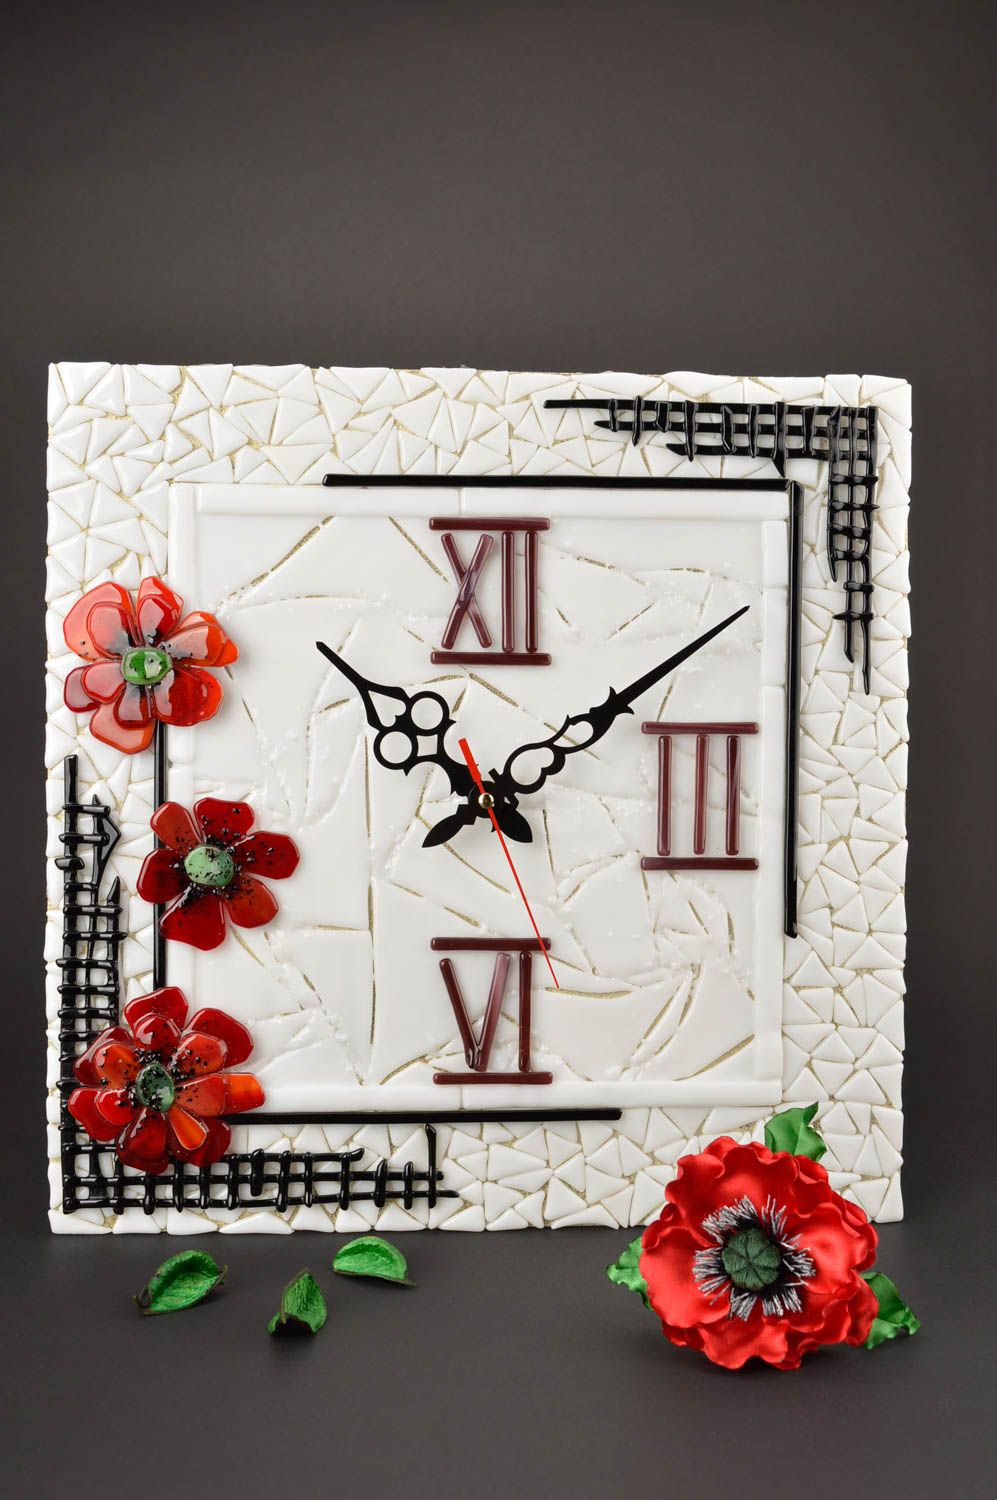 Handmade glass clock wall clock stylish accessories wall decor decor use only photo 1